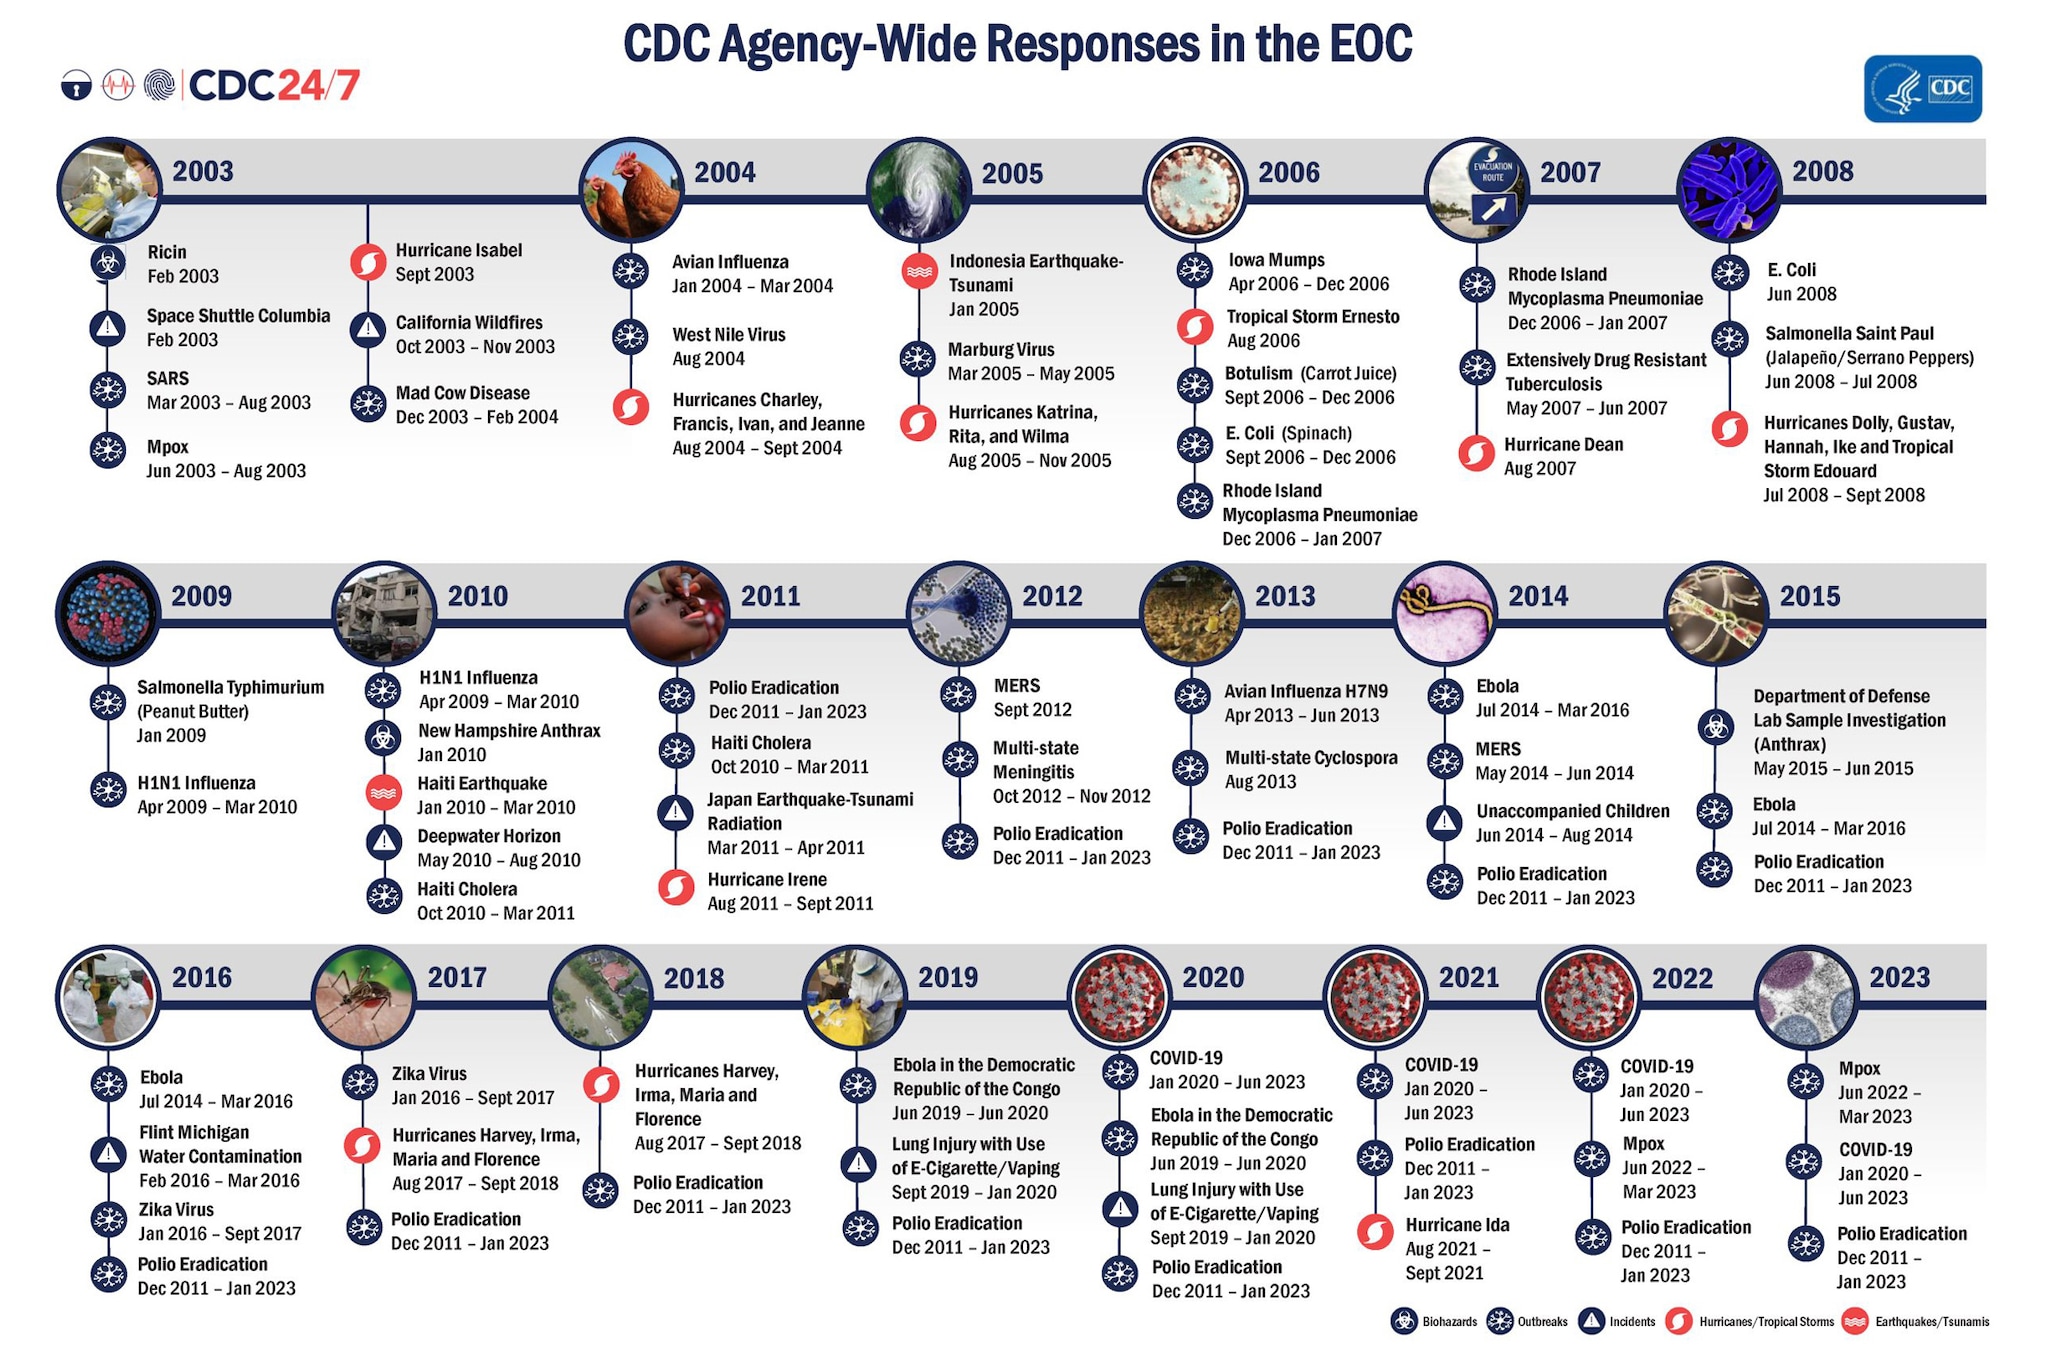 CDC Agency-wide Response Timeline